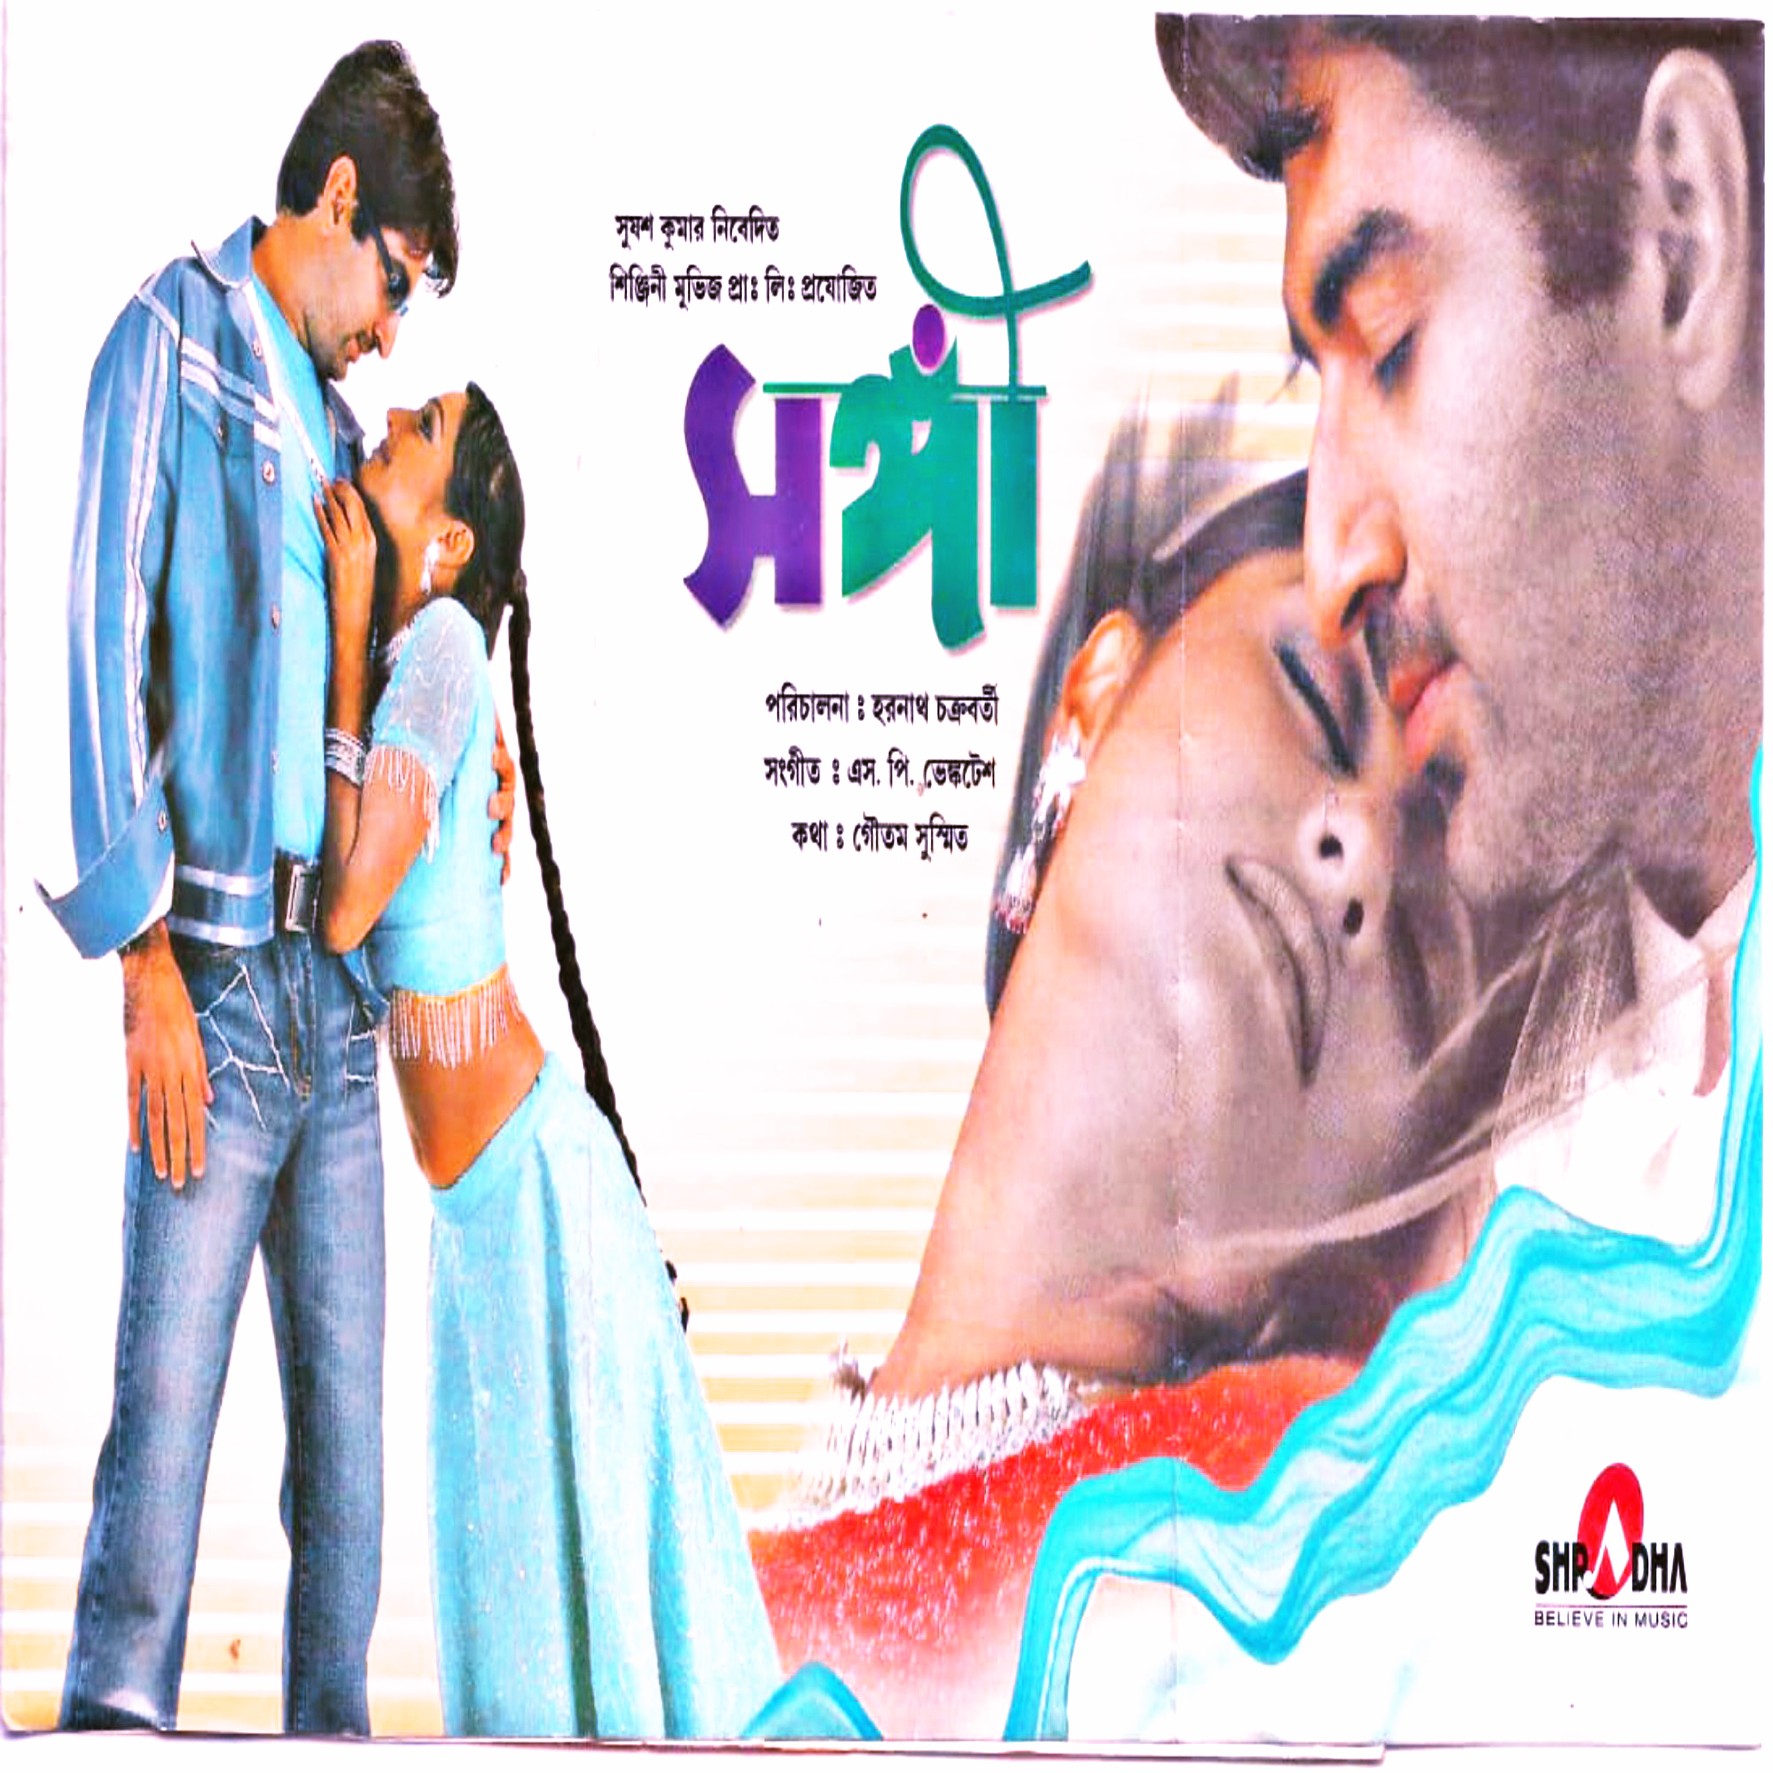 VBR MP3 World: Sangee (2003) Bengali Movie 320kbps VBR MP3 Download